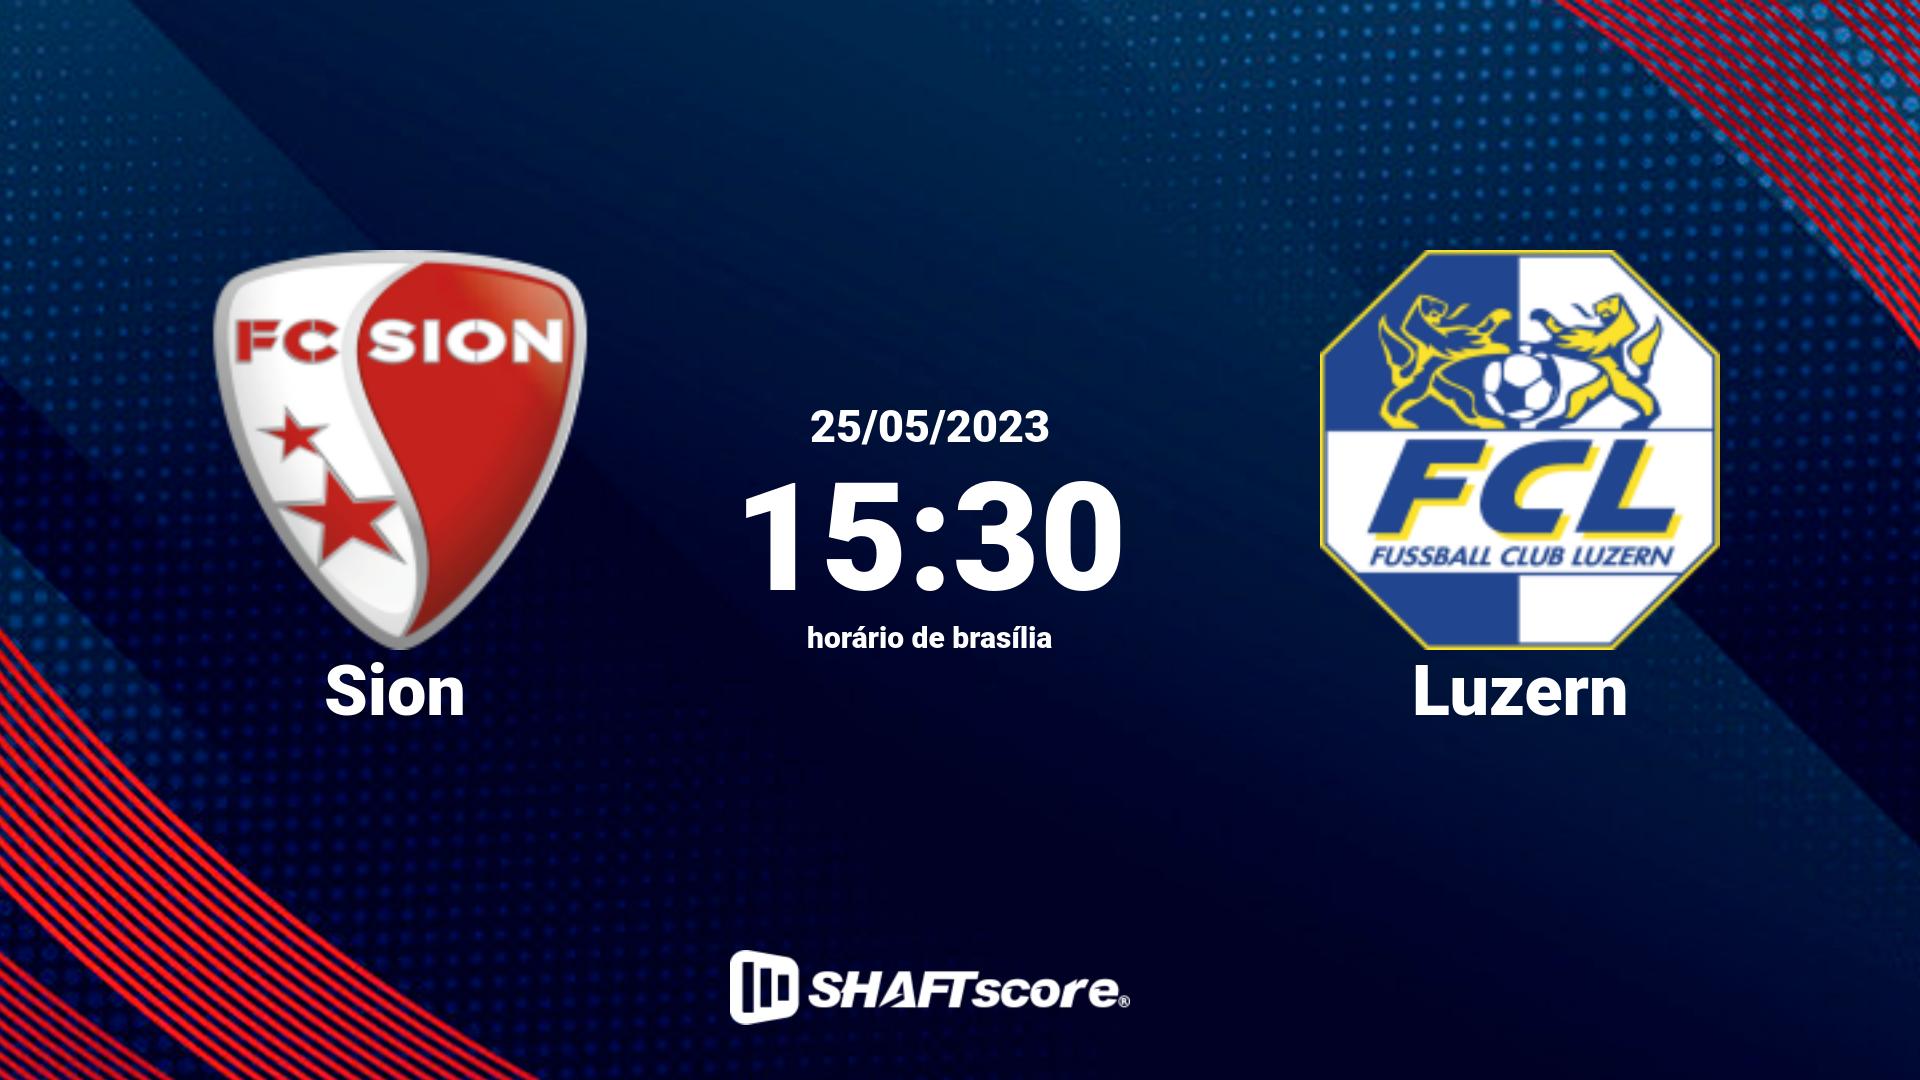 Estatísticas do jogo Sion vs Luzern 25.05 15:30